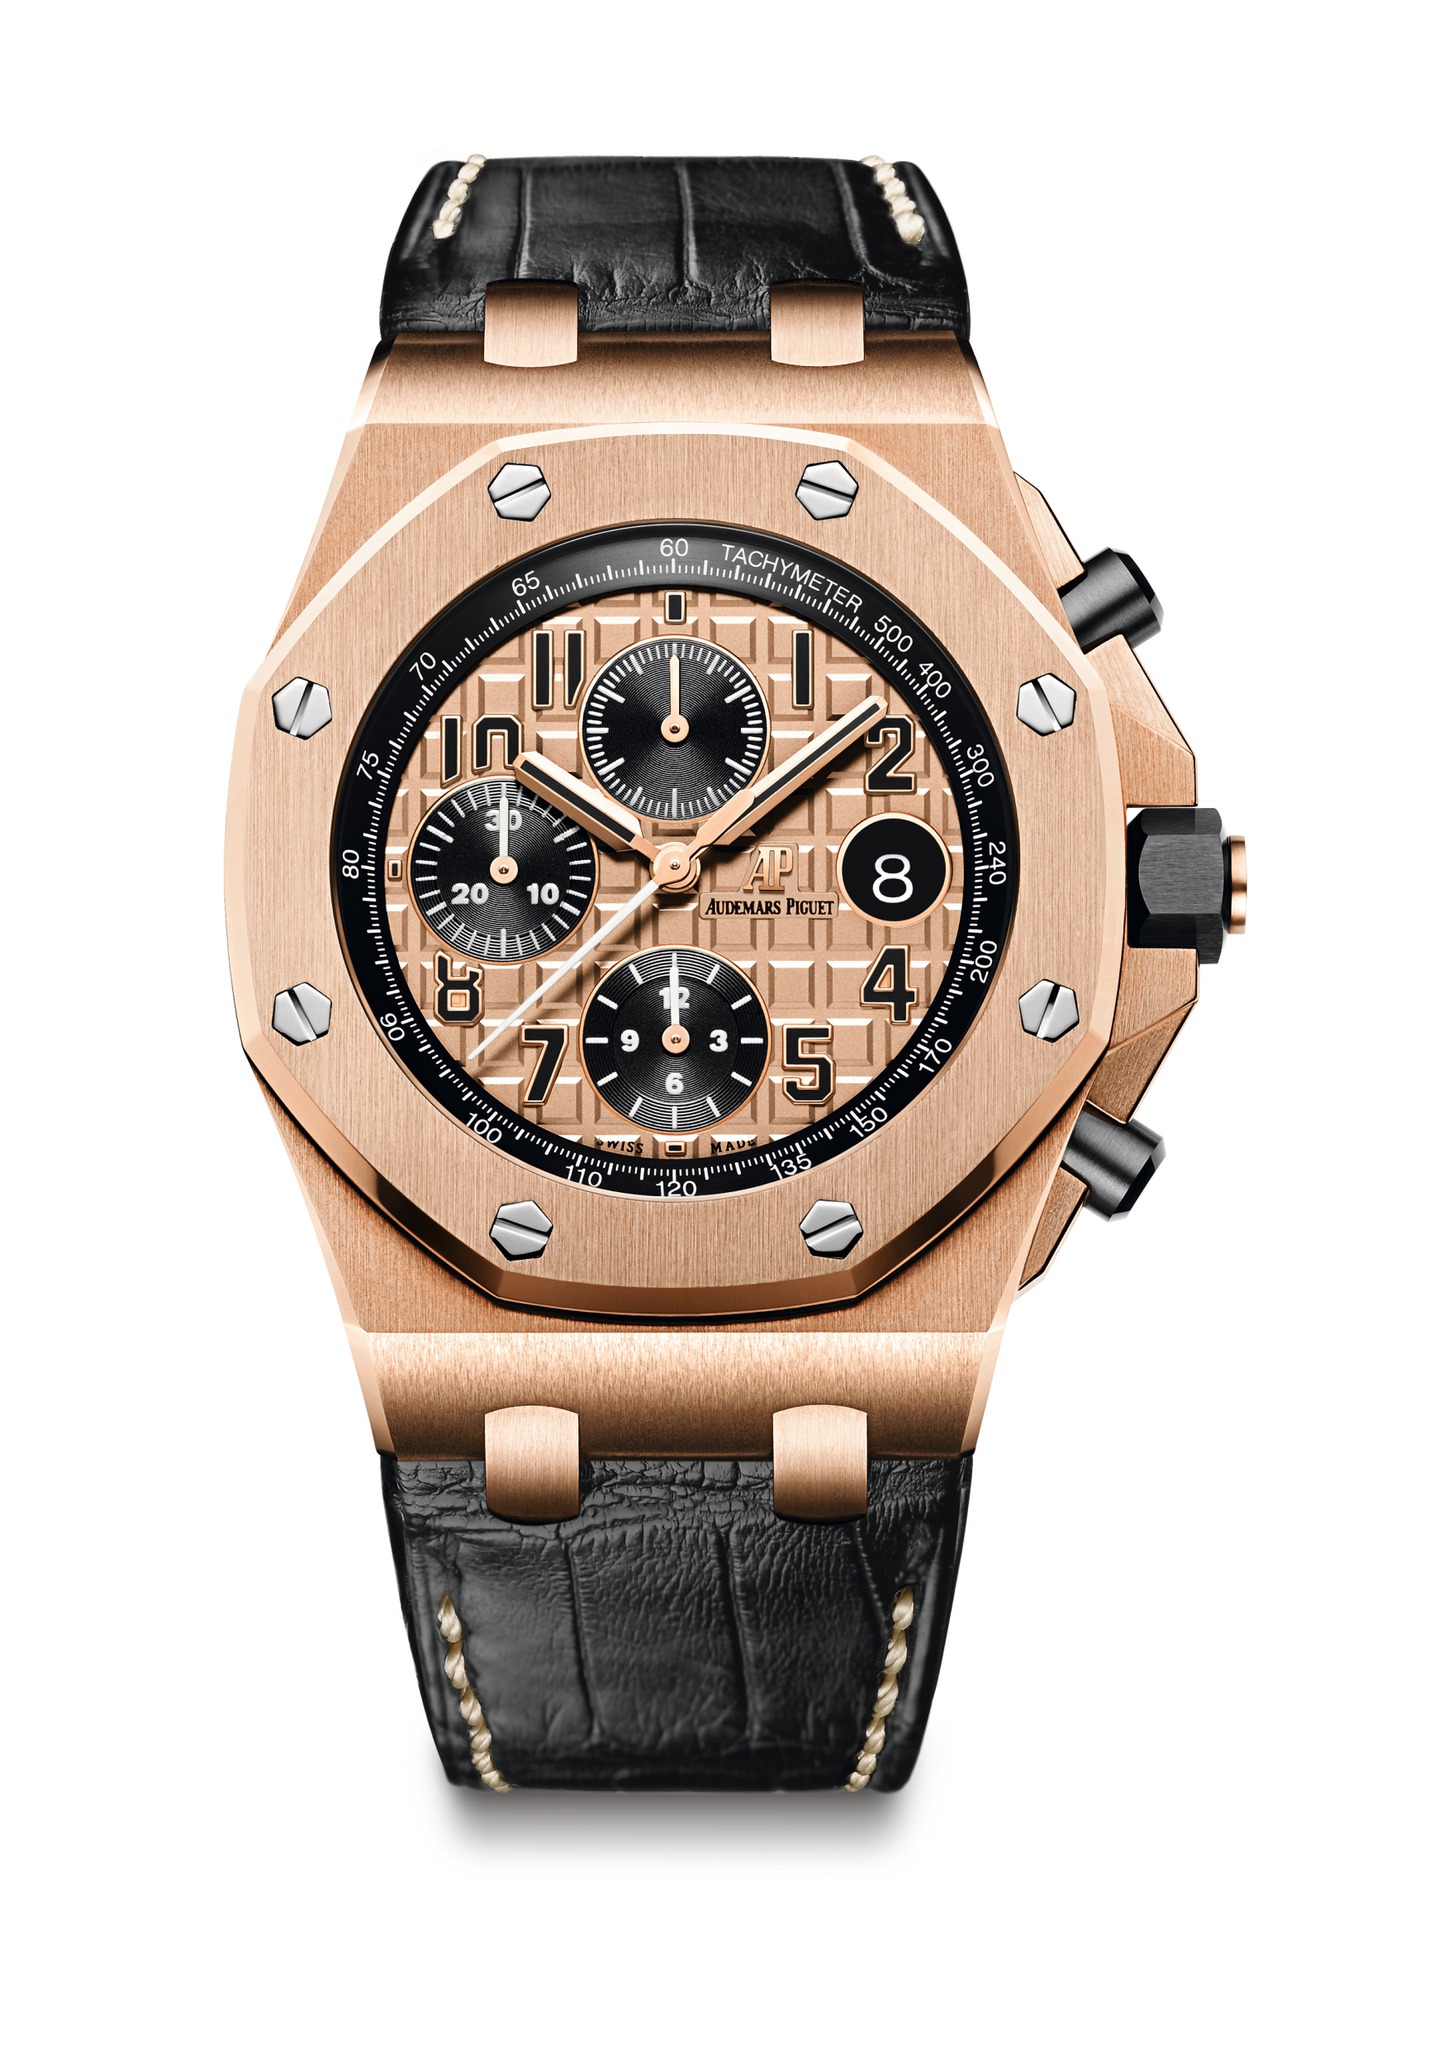 Audemars Piguet New Royal Oak Offshore Chronograph Pink Gold watch REF: 26470OR.OO.A002CR.01